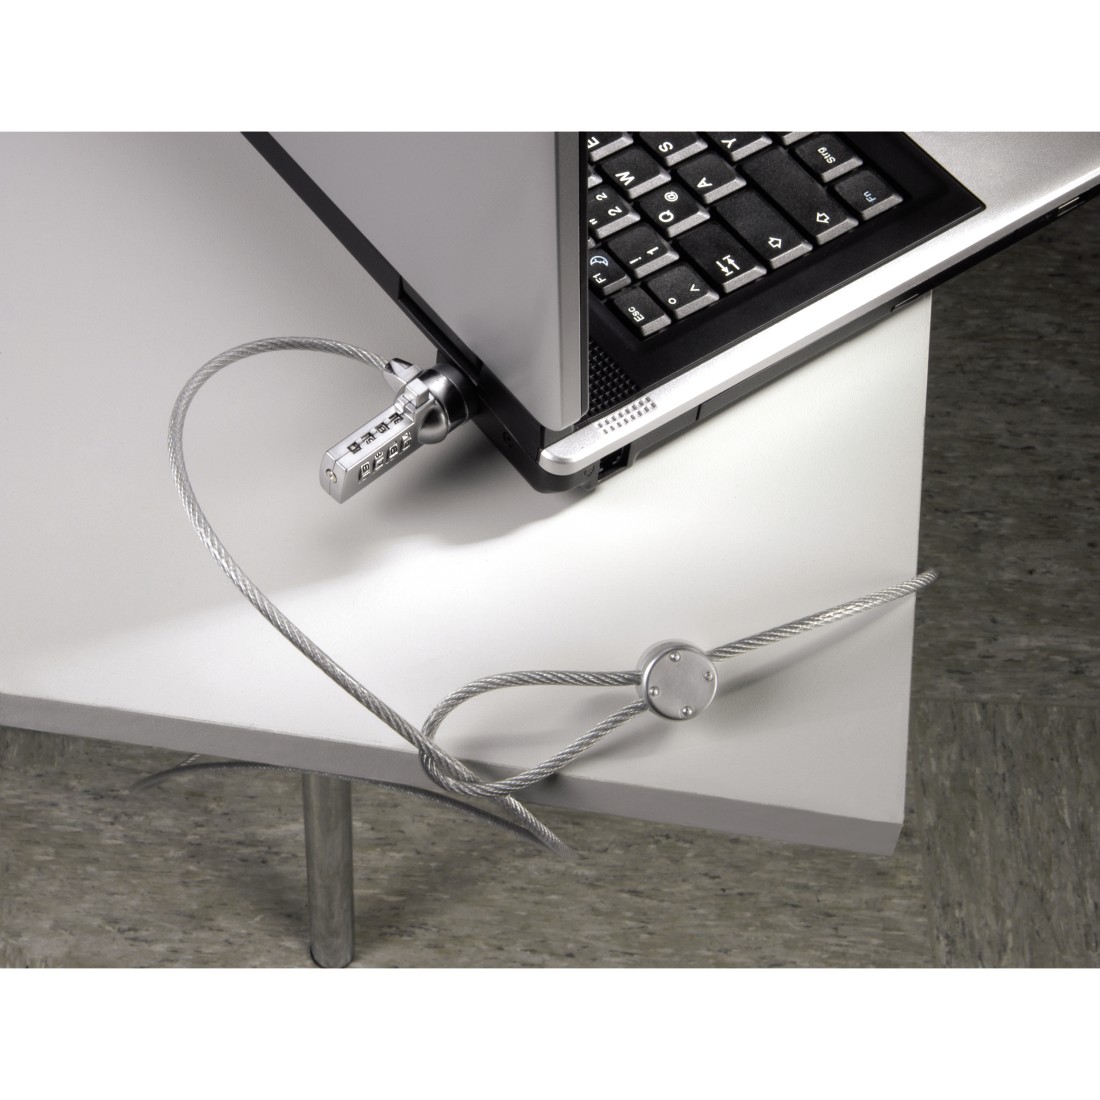 macbook pro cable lock combination